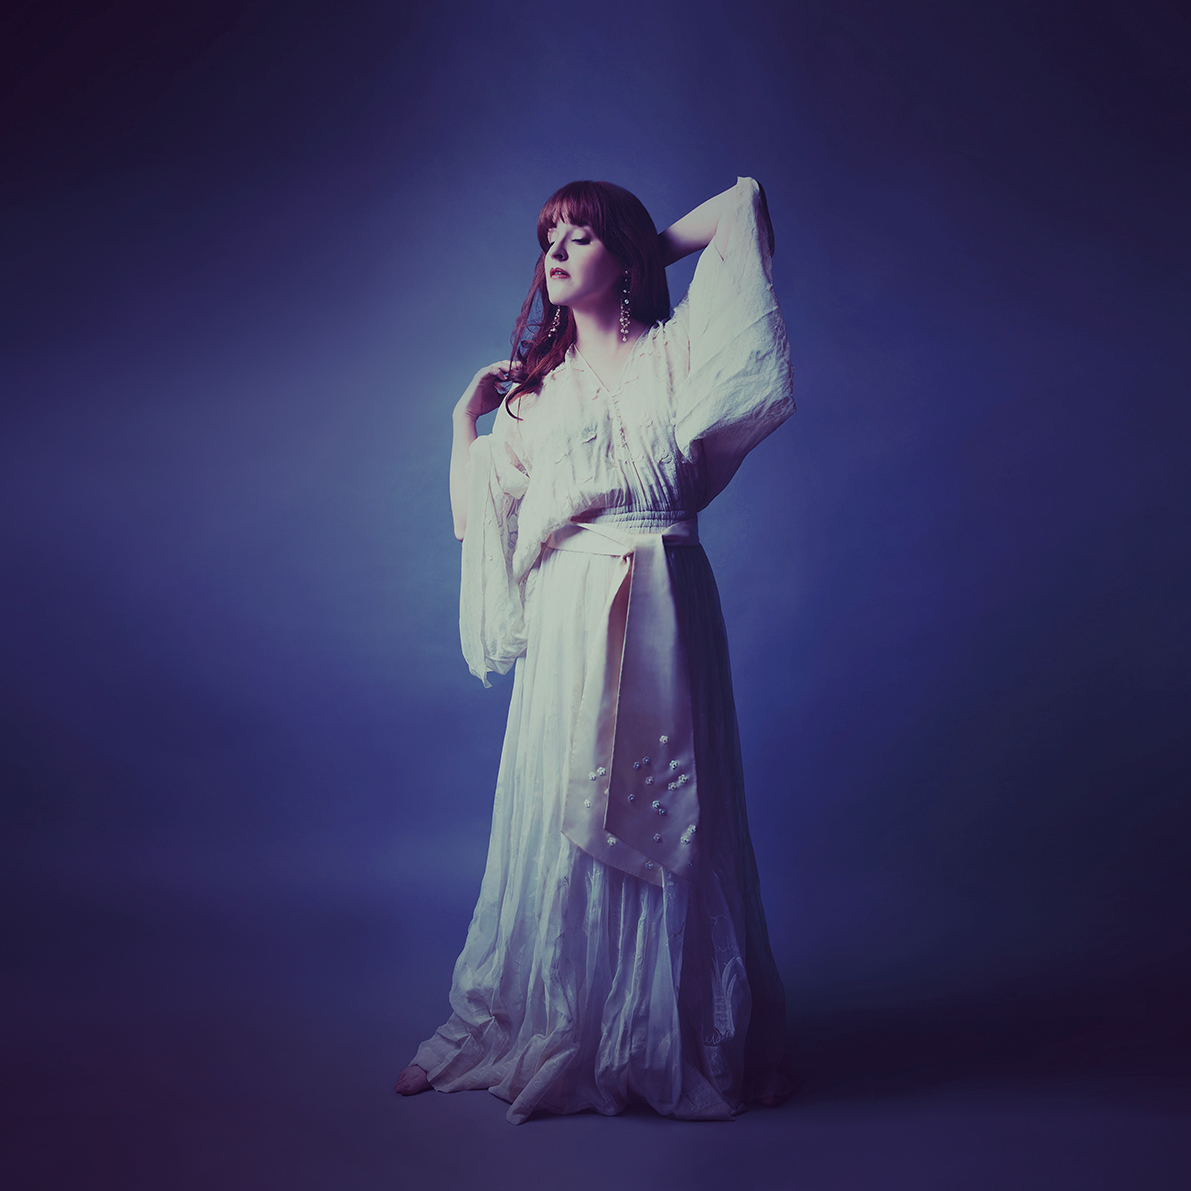 Diana Panton to release tenth album “blue” October 28th – Hamilton Musician